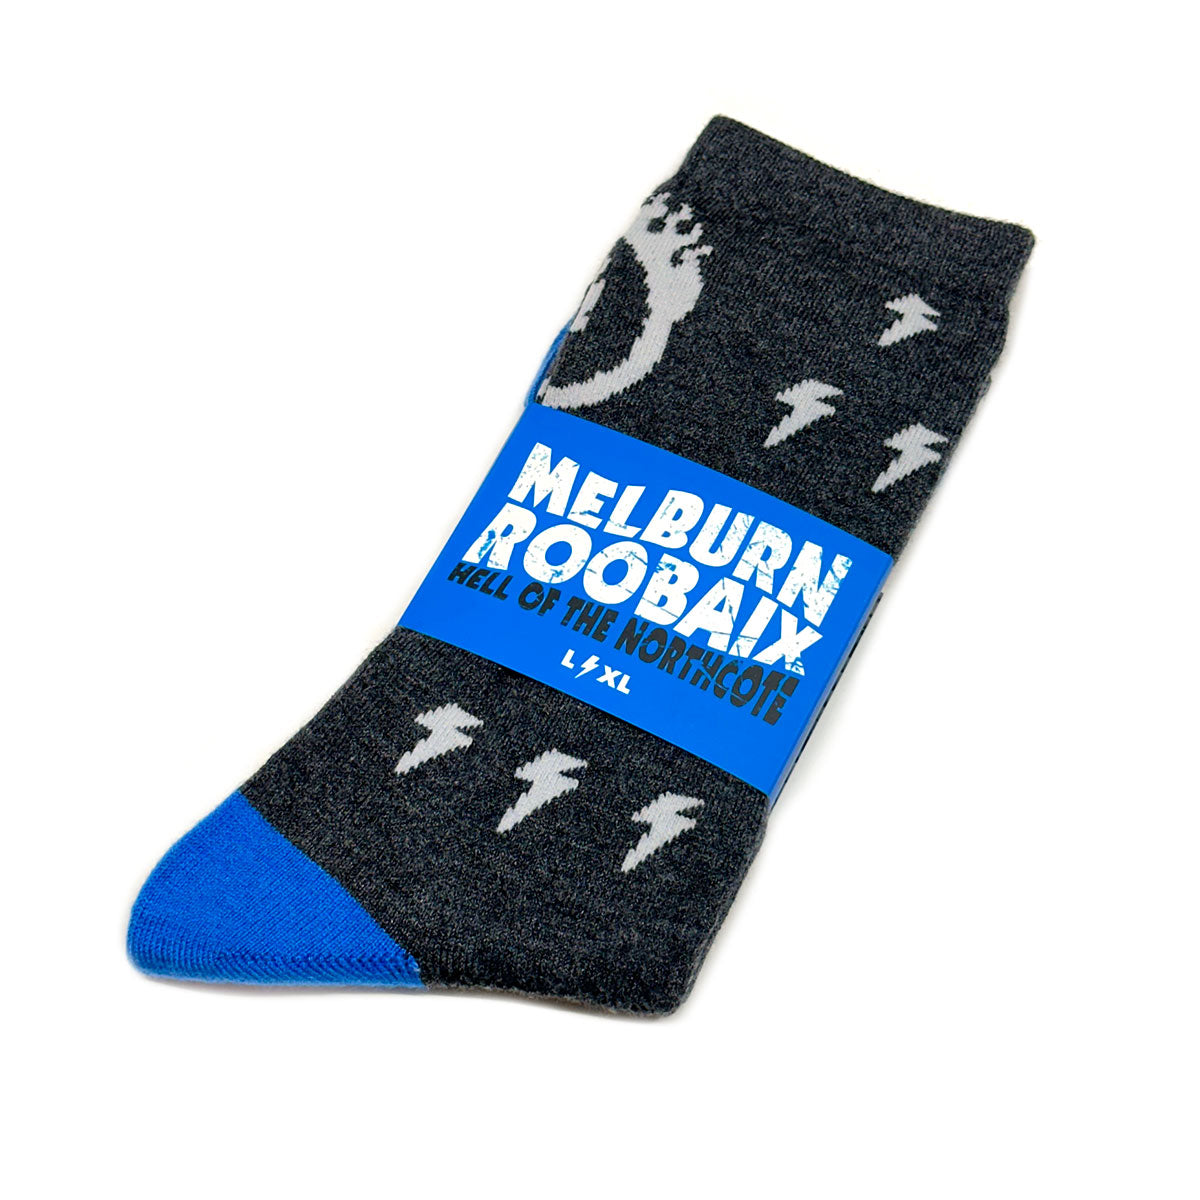 Melburn Roobaix Merino Sock - Limited Edition